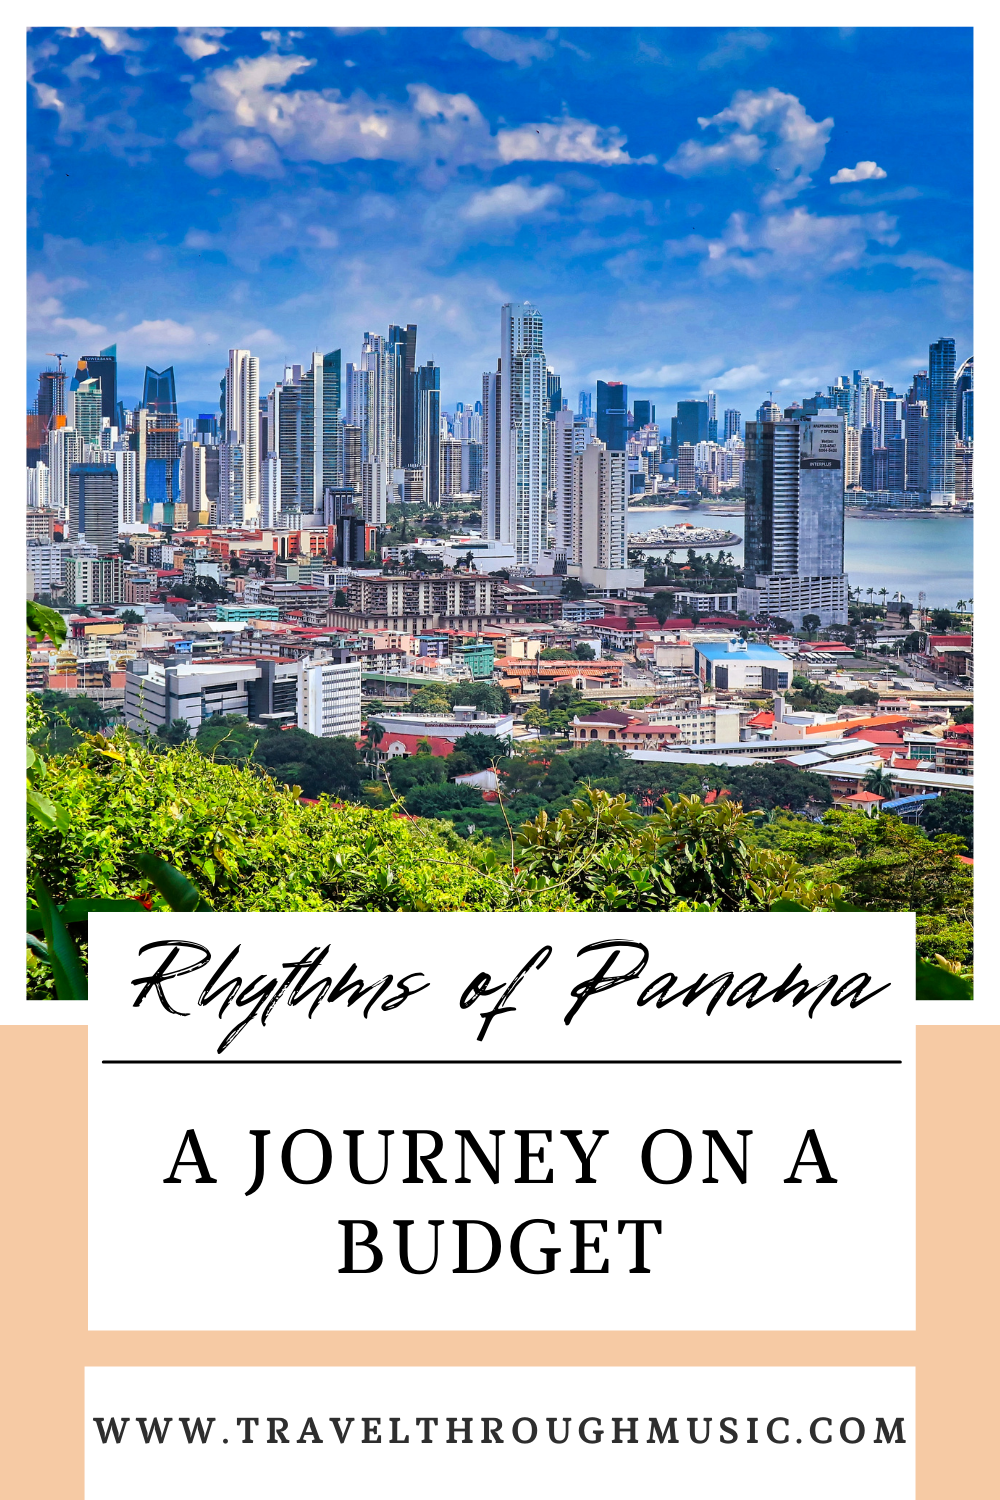 Rhythms of Panama: A Journey on a Budget